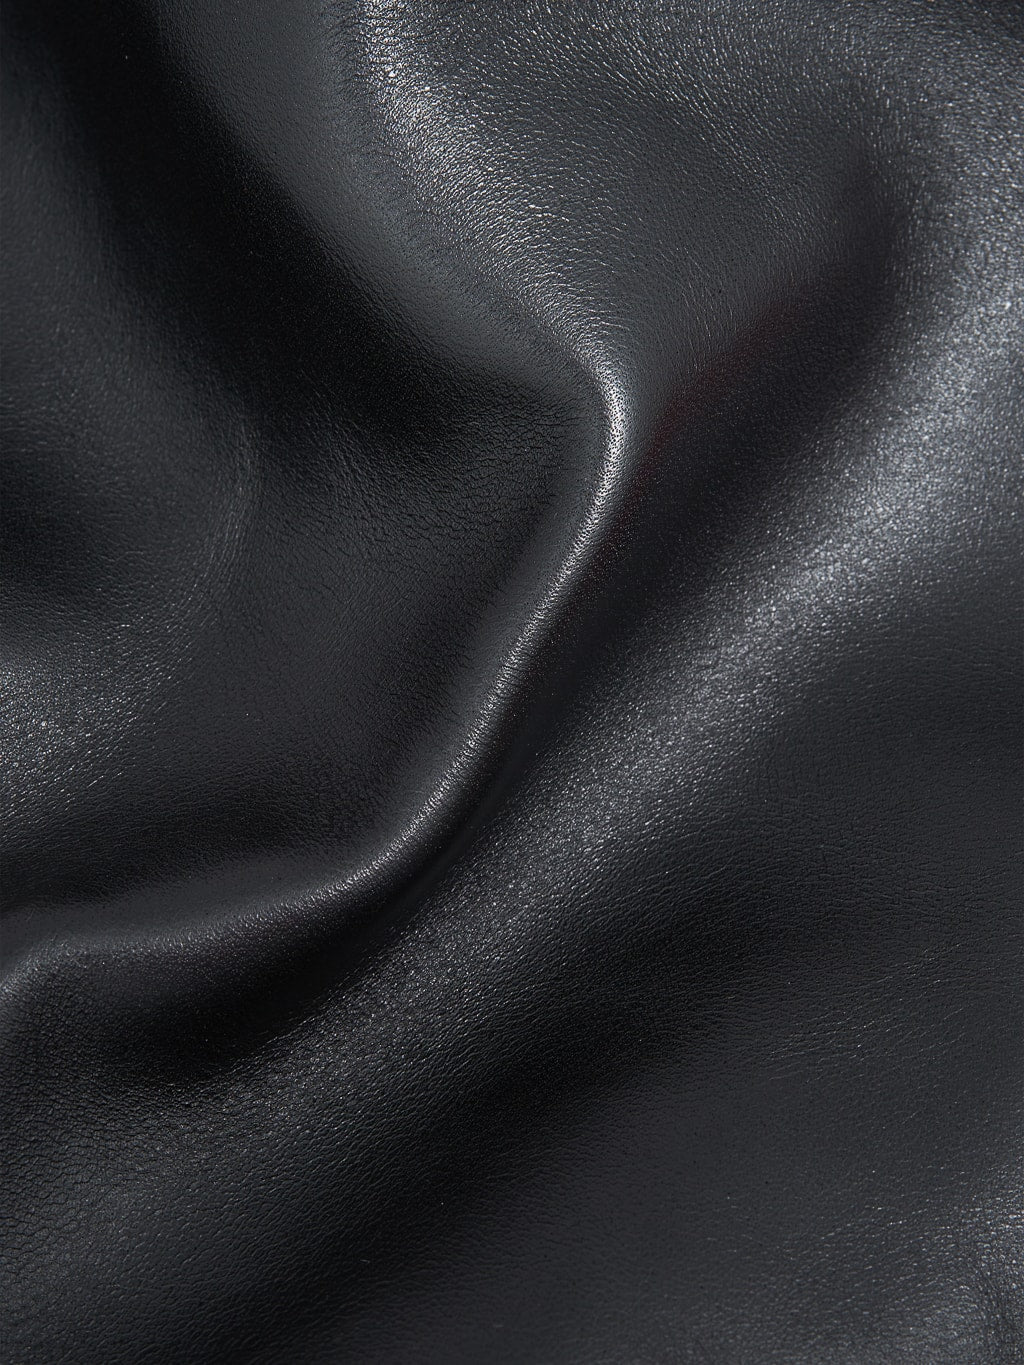 The Flat Head Horsehide leather Single Riders Jacket Black Semi Aniline texture